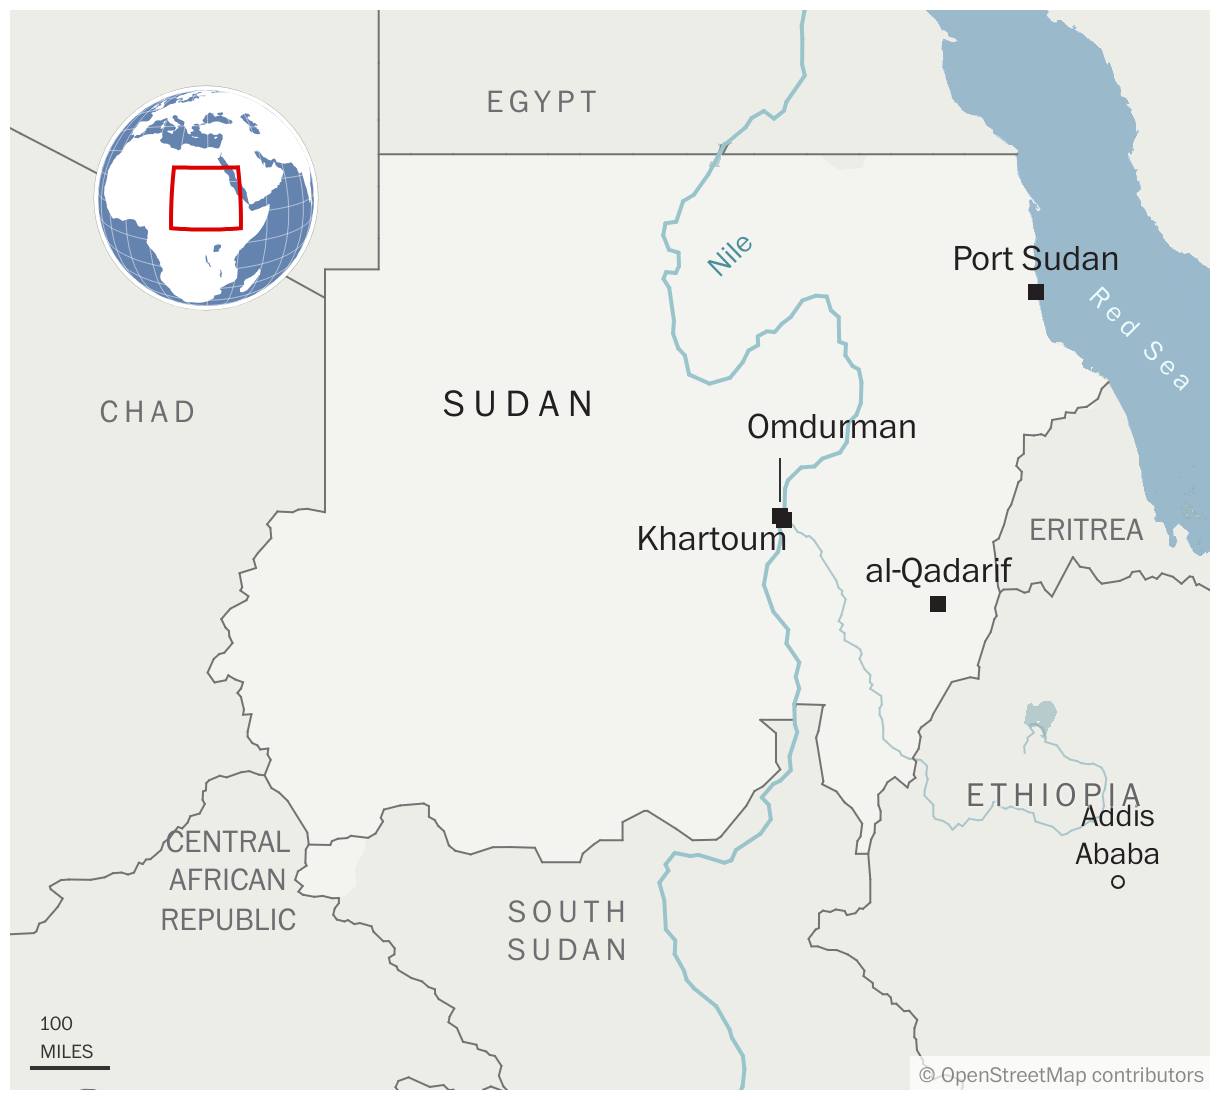 Inside Sudan, devastating warfare forces desperate choices